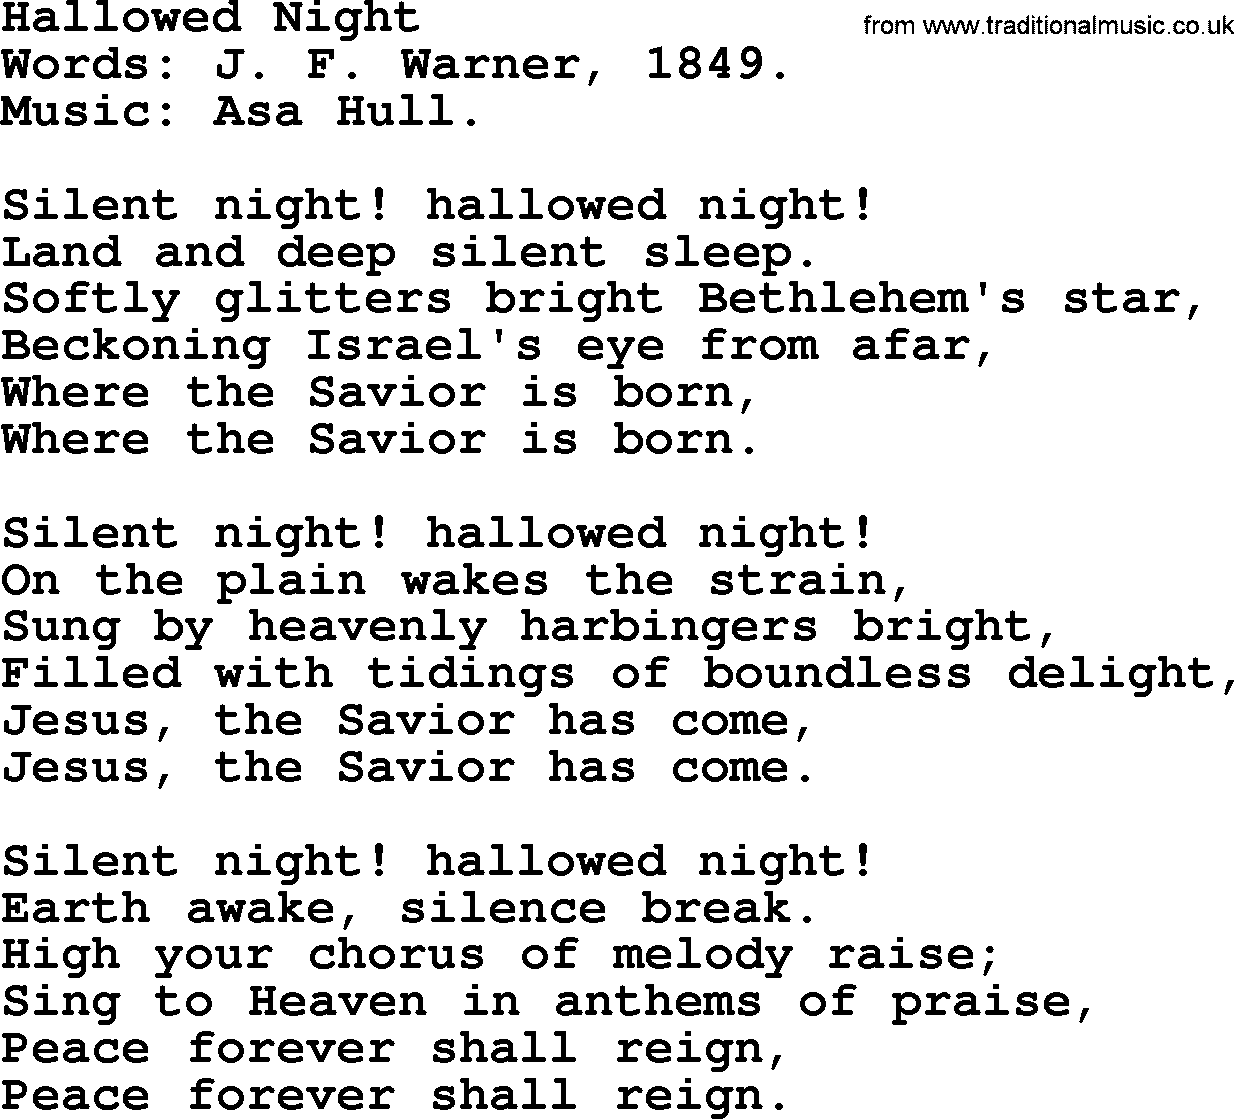 Christmas Hymns, Carols and Songs, title: Hallowed Night, lyrics with PDF